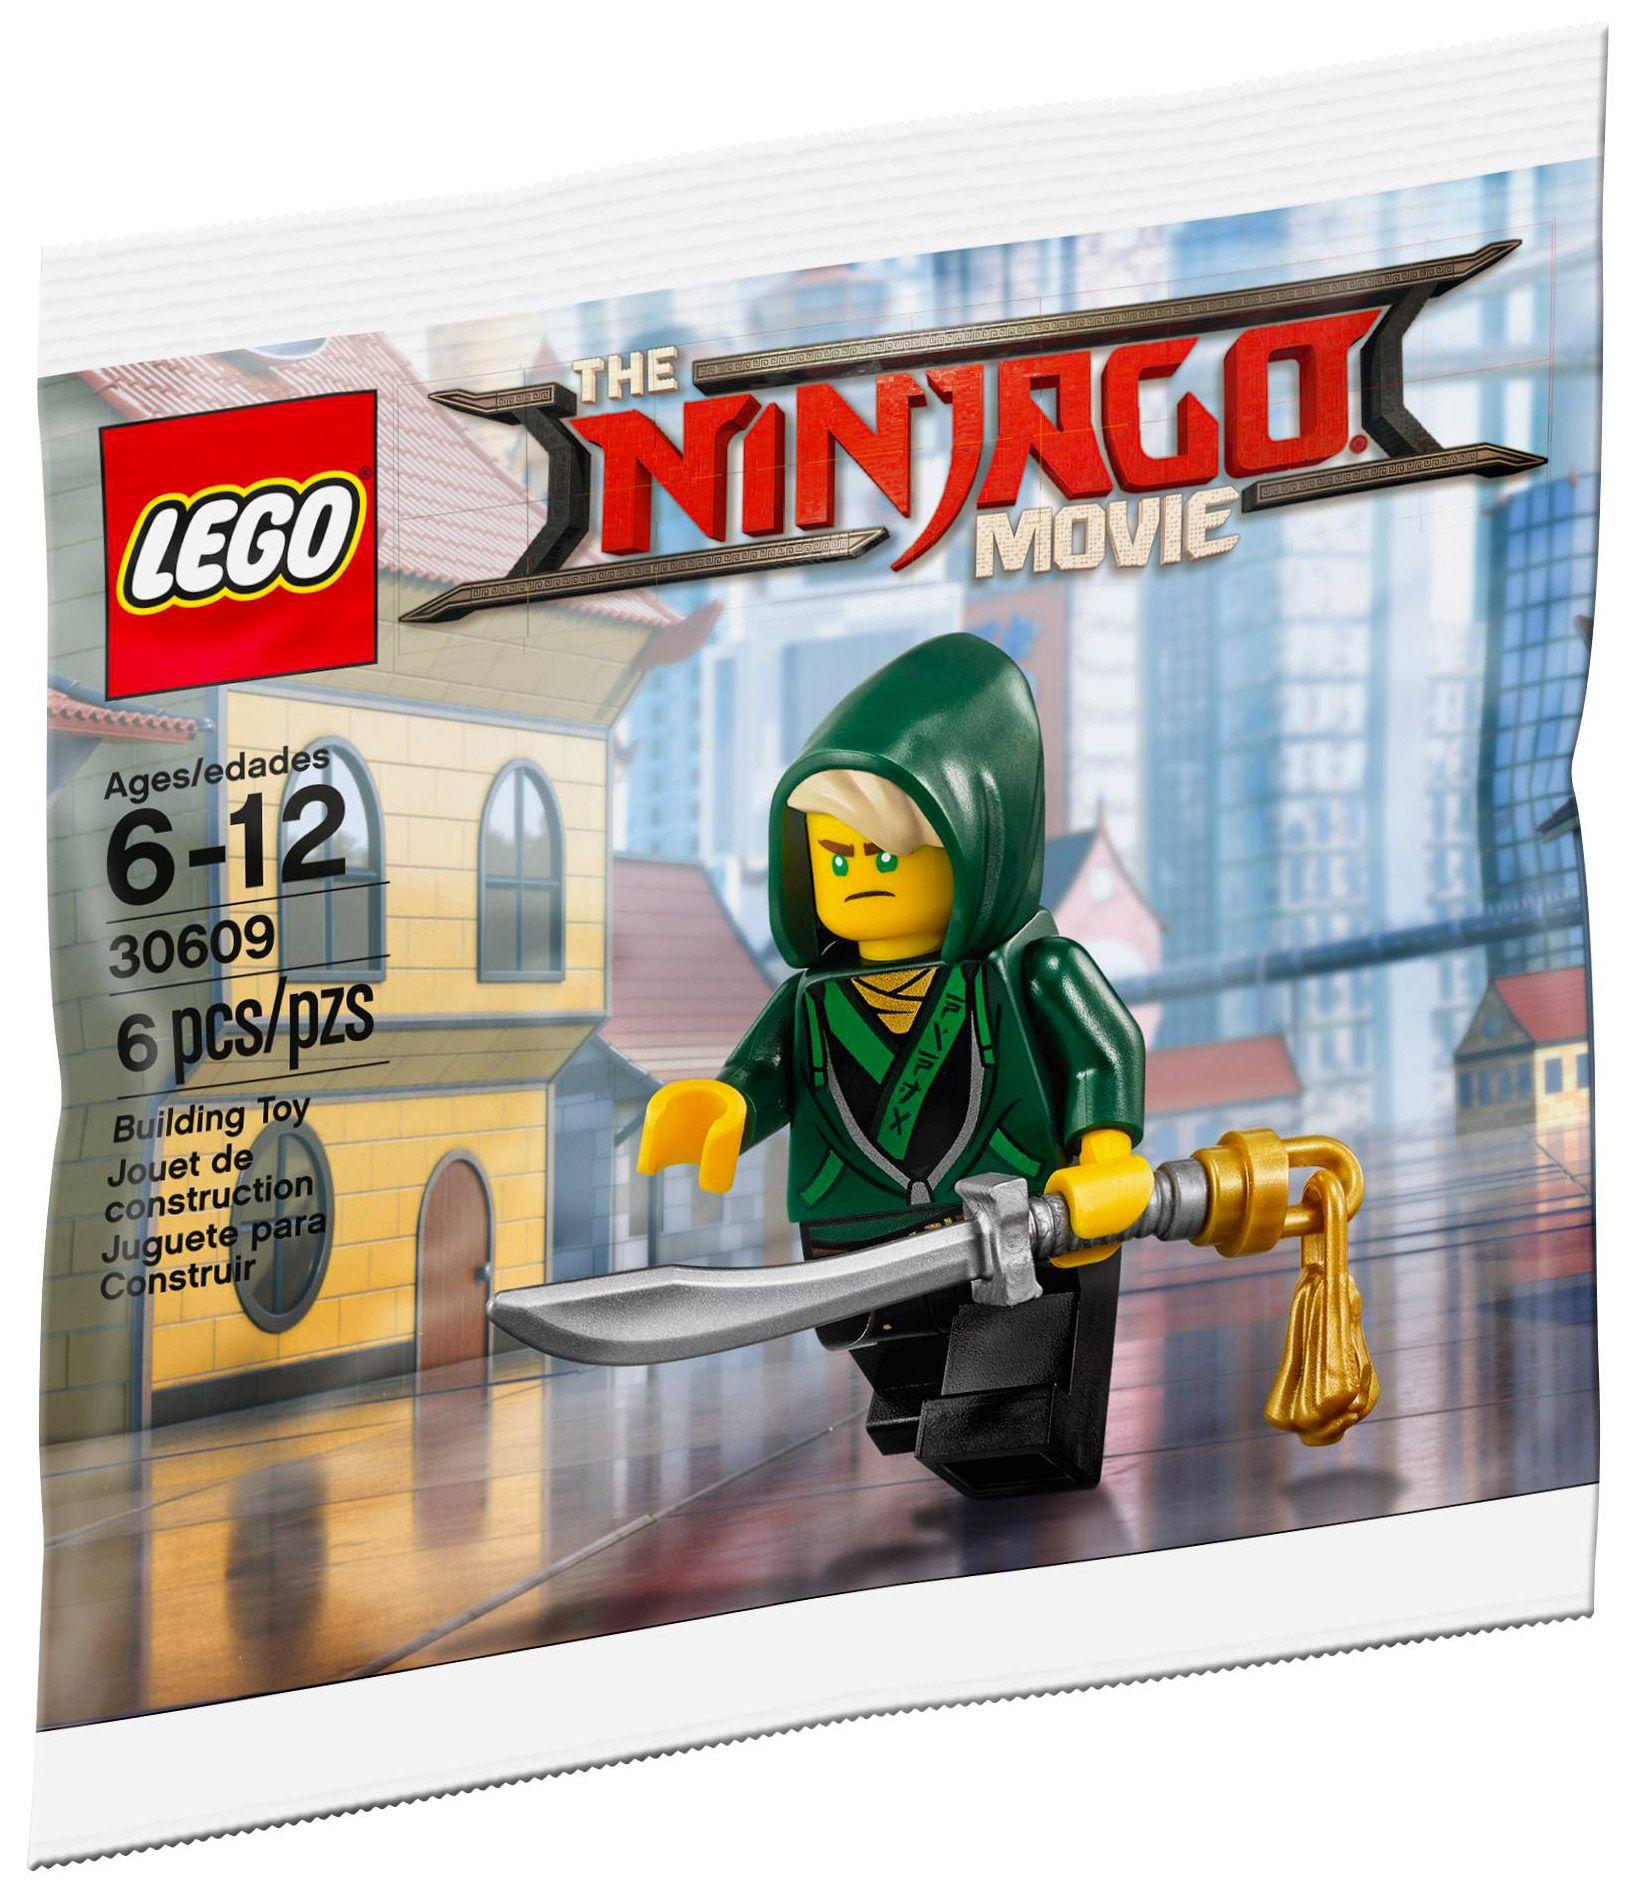 Lego Ninjago 70601 Le requin du ciel NEUF jamais ouvert